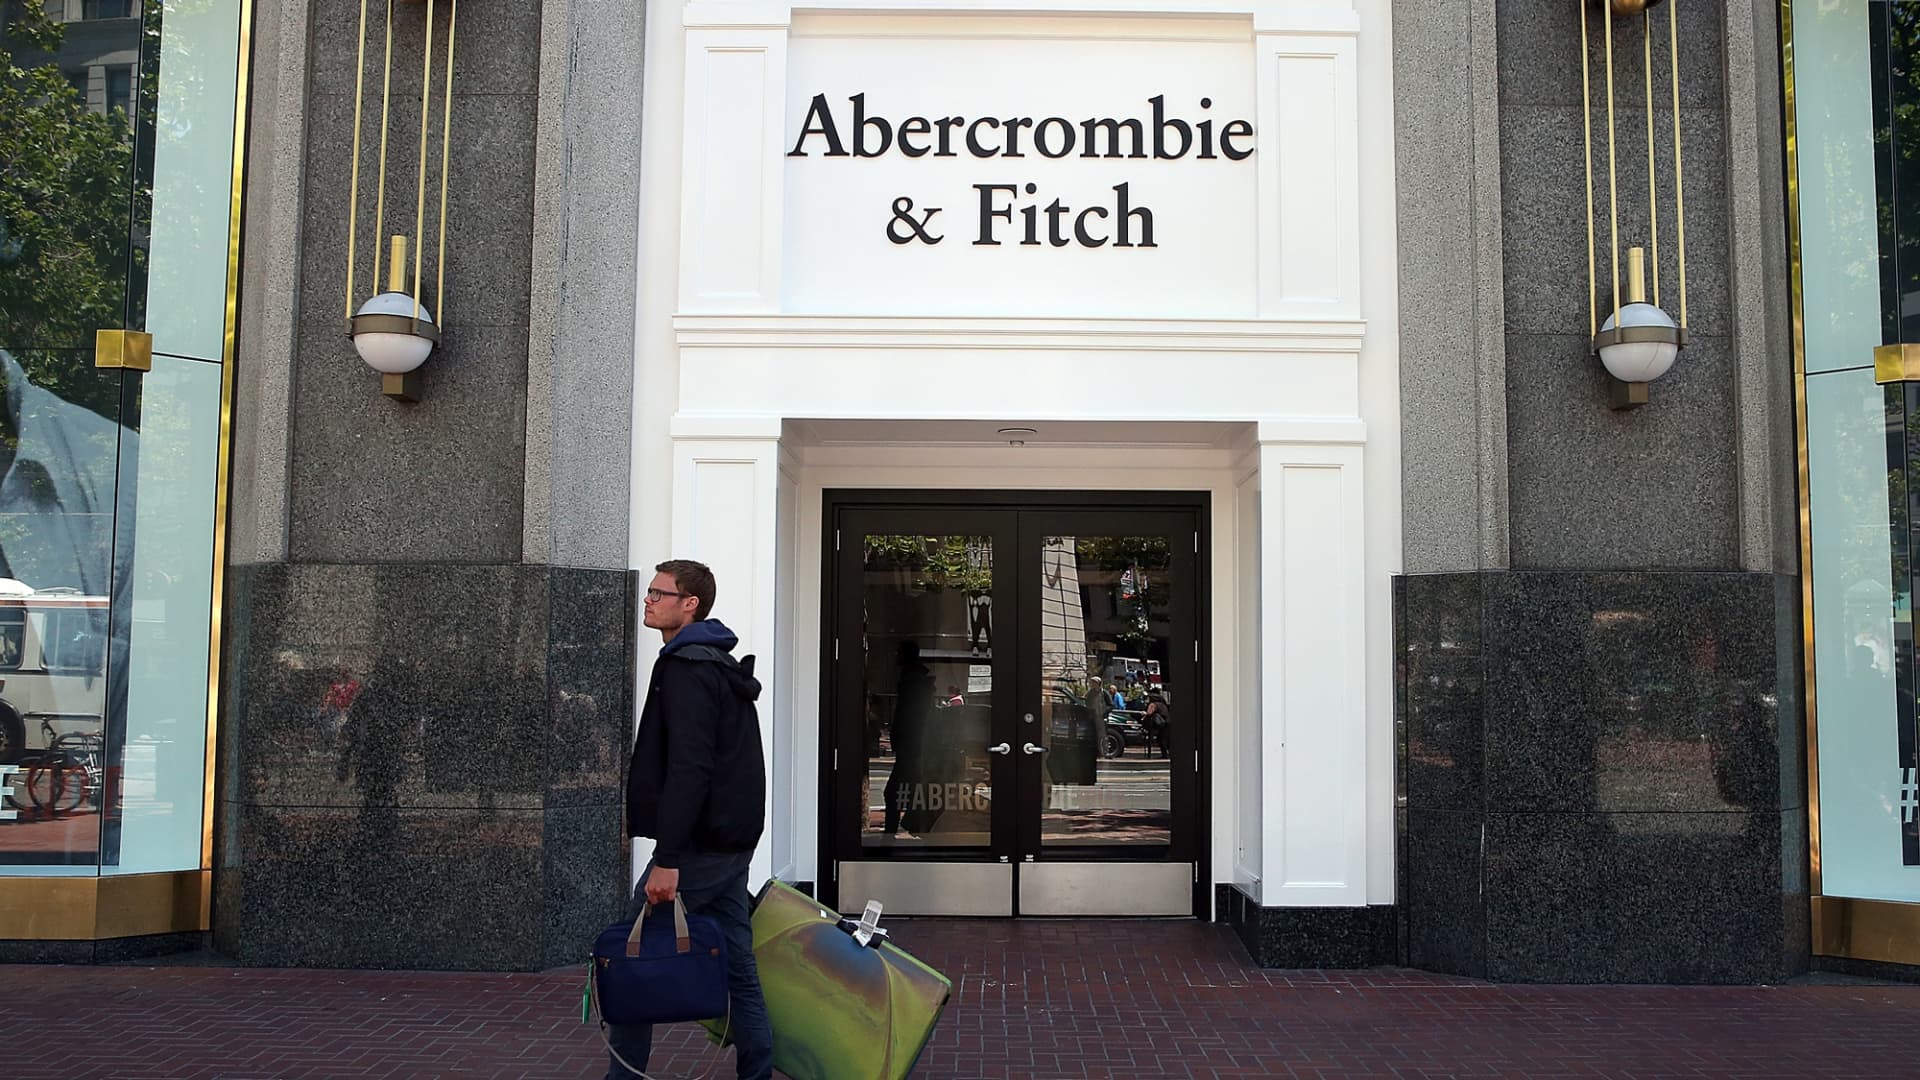 Abercrombie & Fitch shares soar 15% as retailer blows past earnings estimates, raises guidance